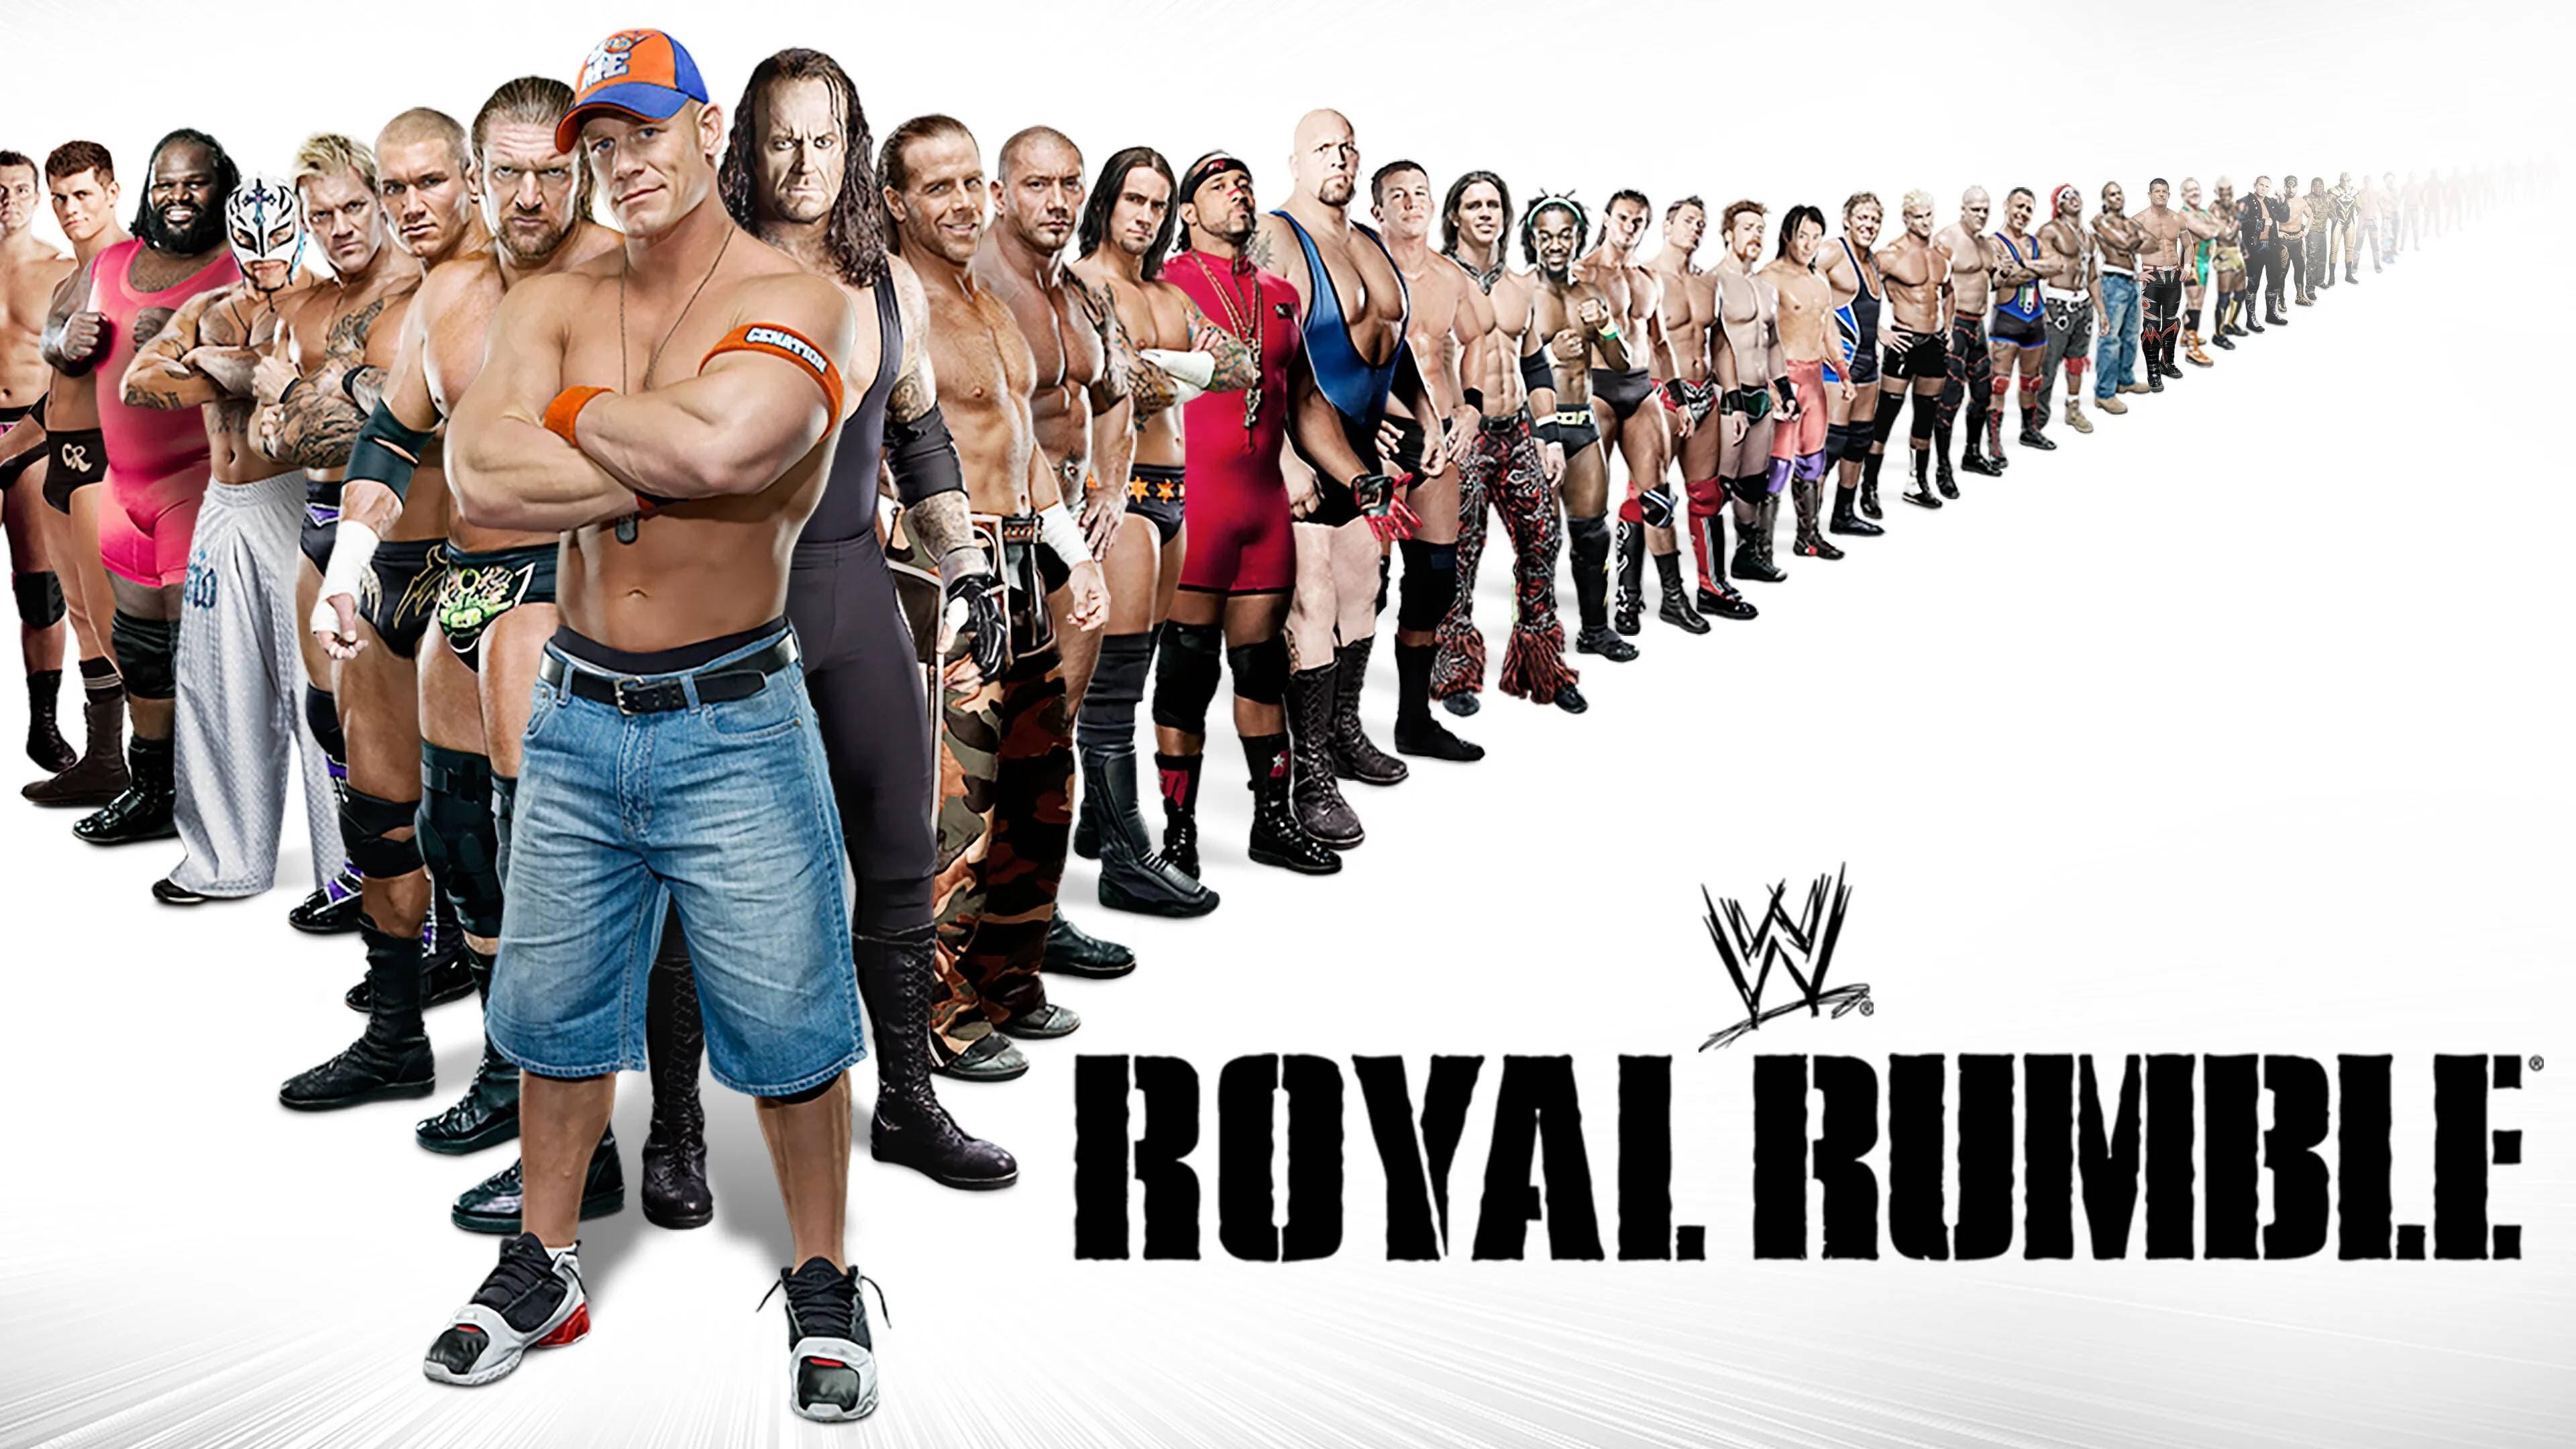 WWE Royal Rumble 2010 backdrop